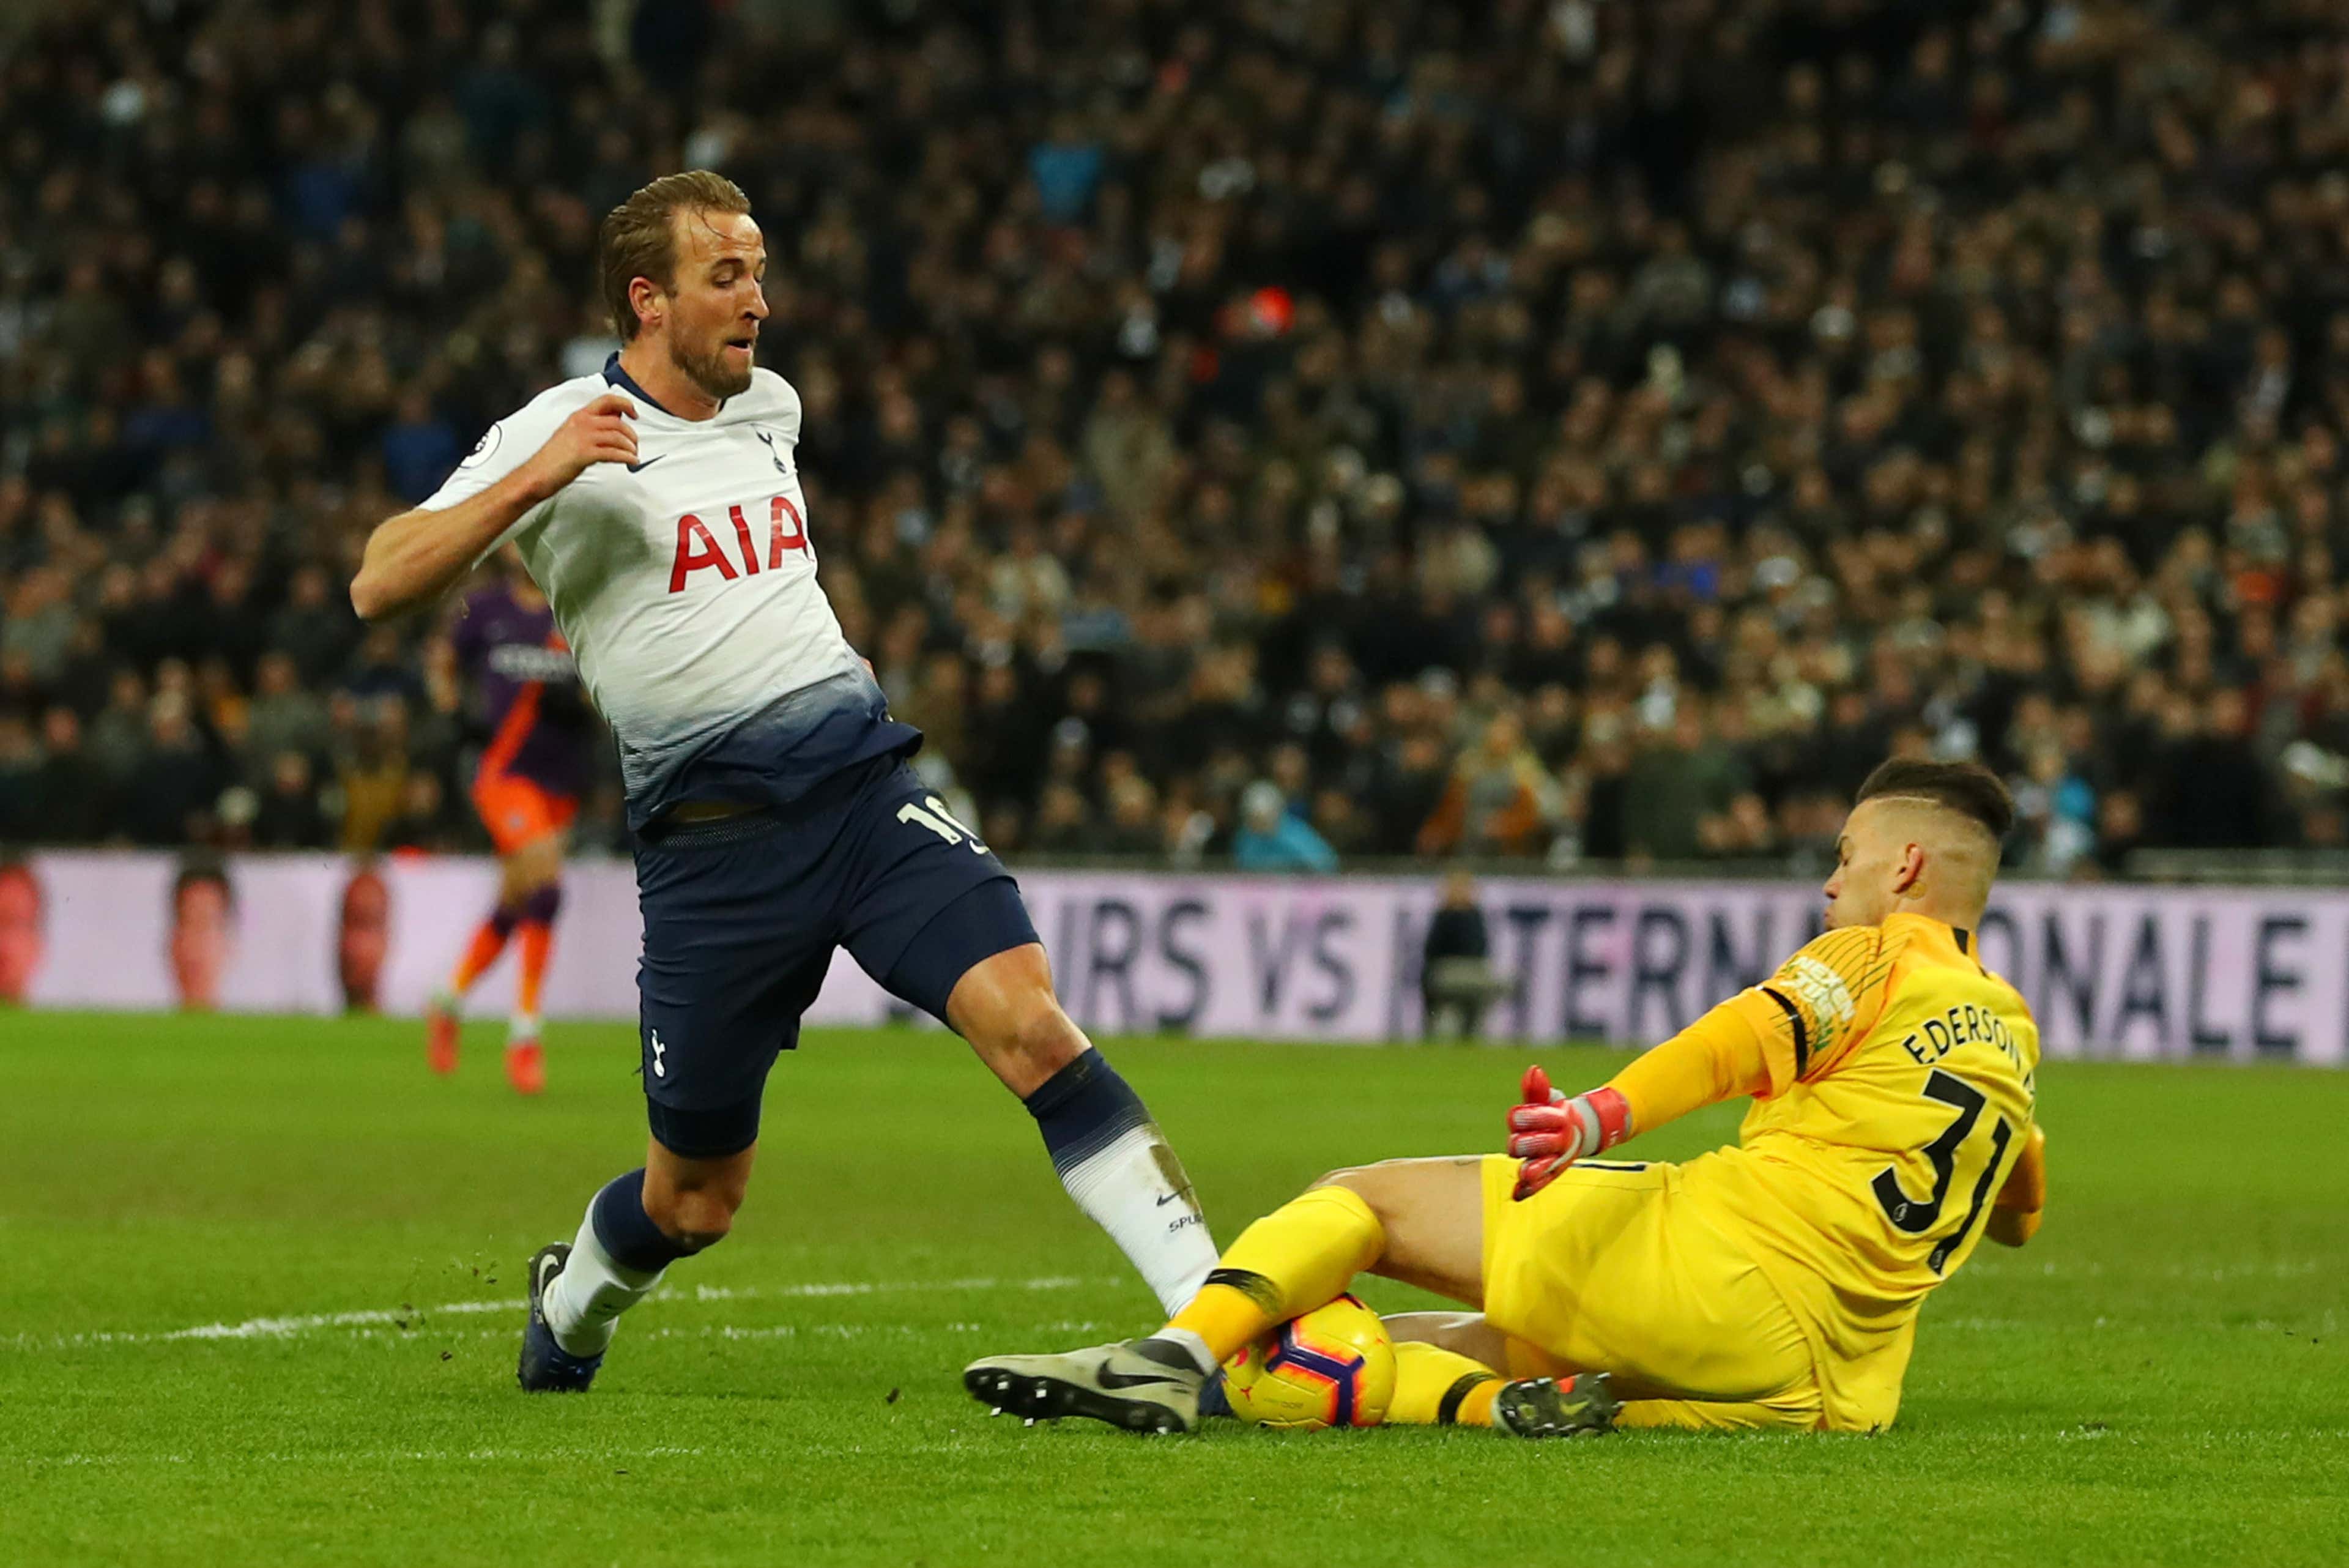 Manchester City vs. Tottenham prediction, odds, time: 2023 English